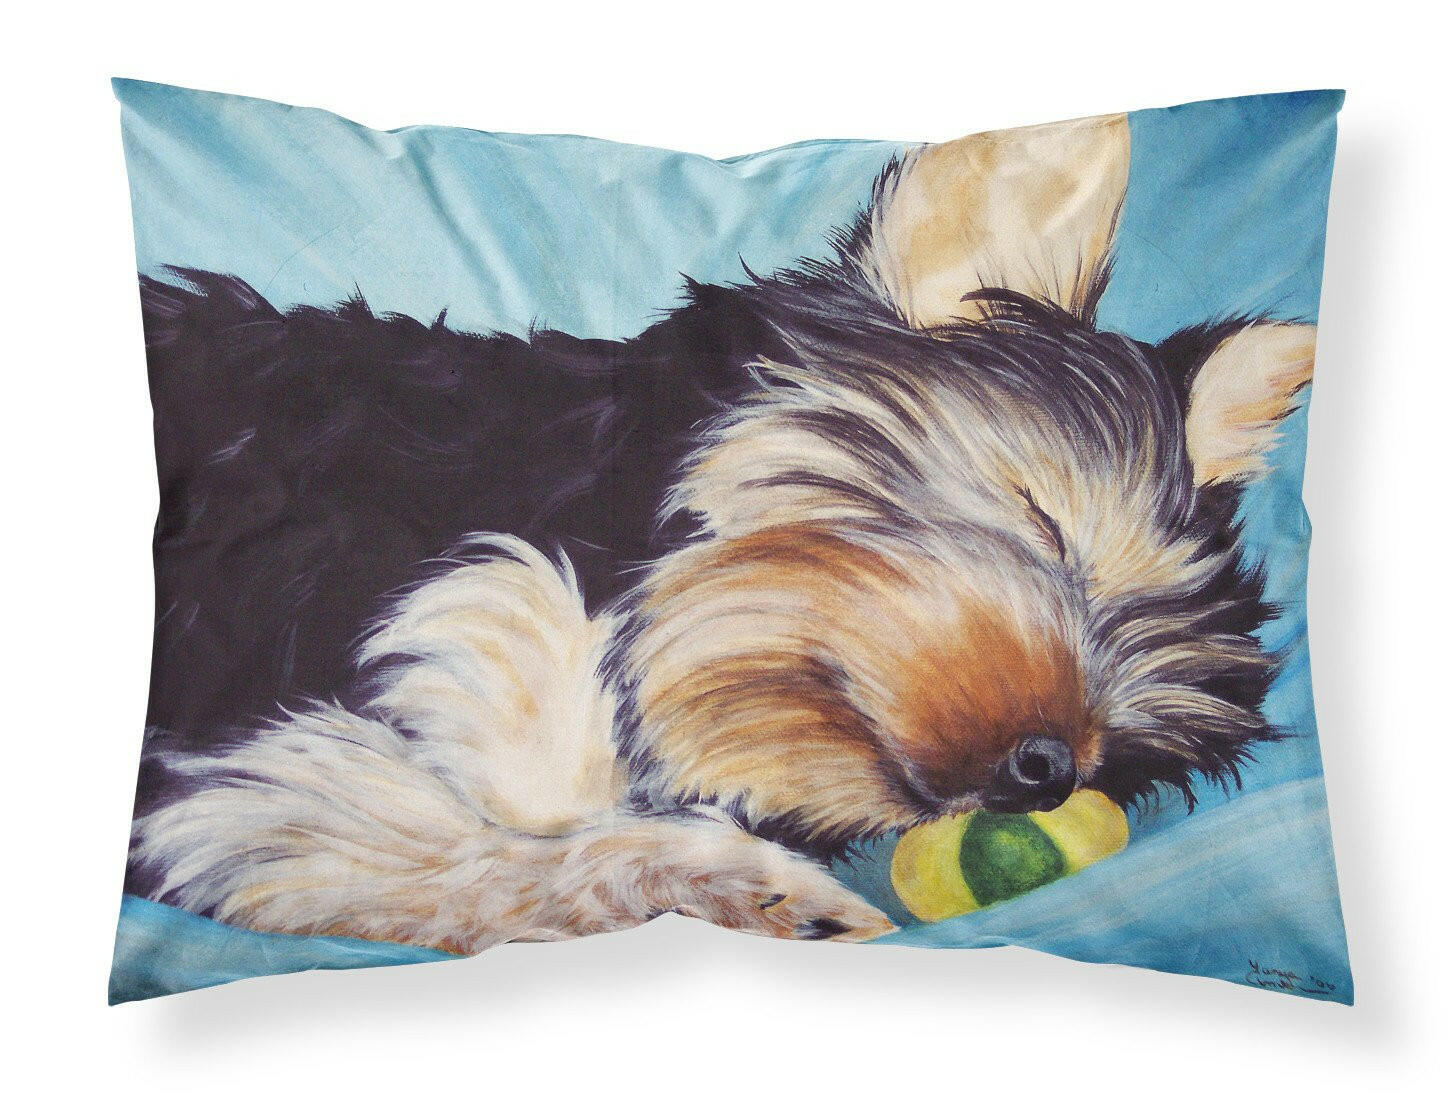 Naptime Yorkie Yorkshire Terrier Fabric Standard Pillowcase AMB1075PILLOWCASE by Caroline's Treasures